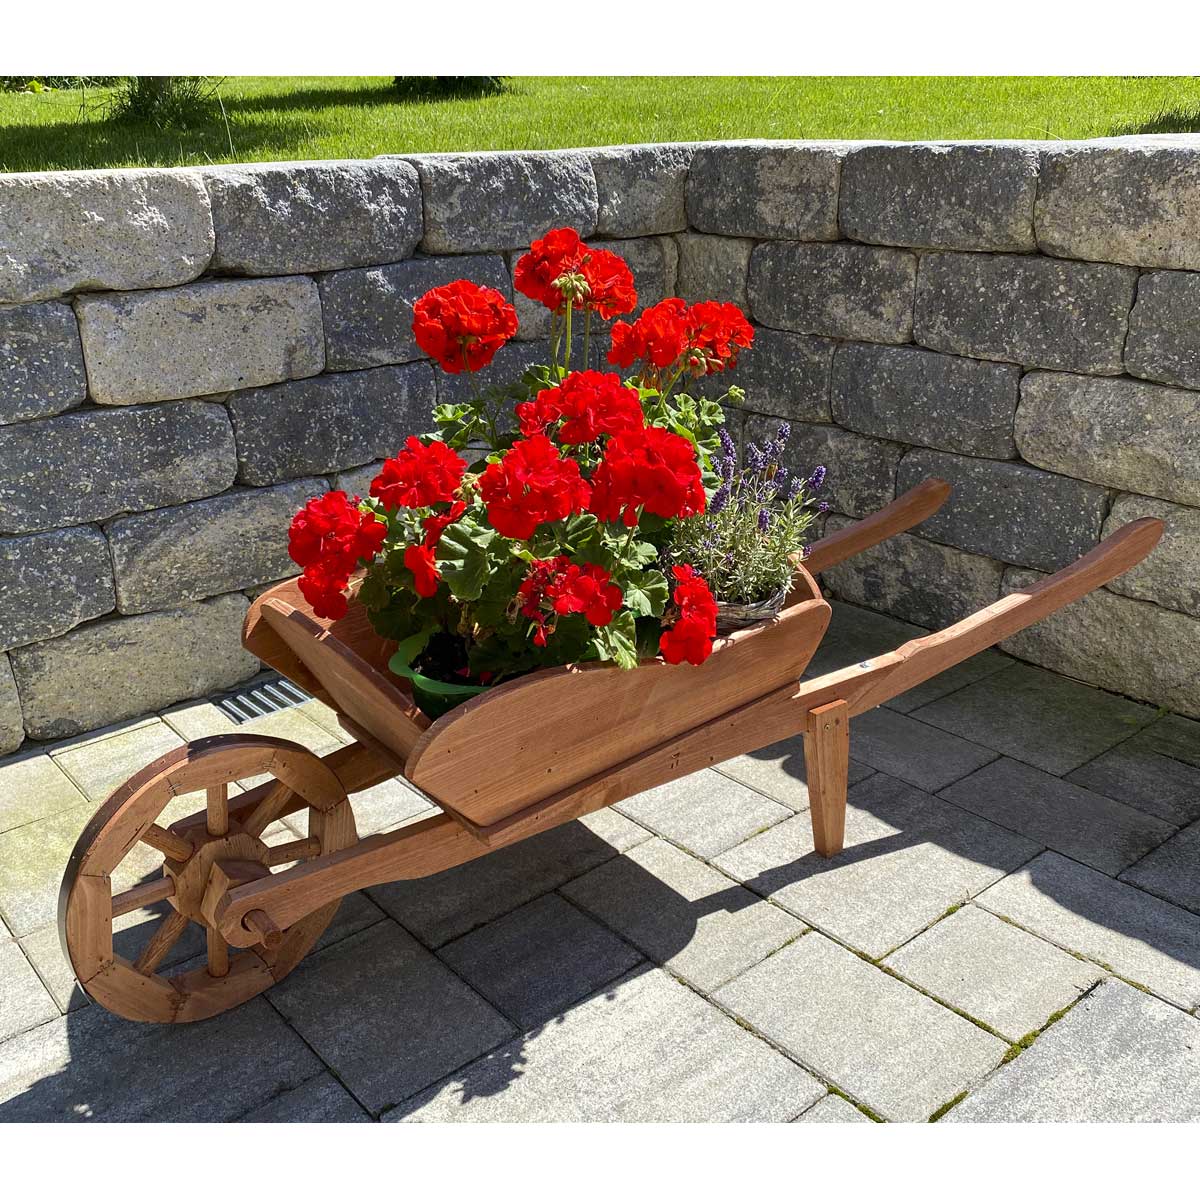 Decorative wheelbarrow made of solid wood